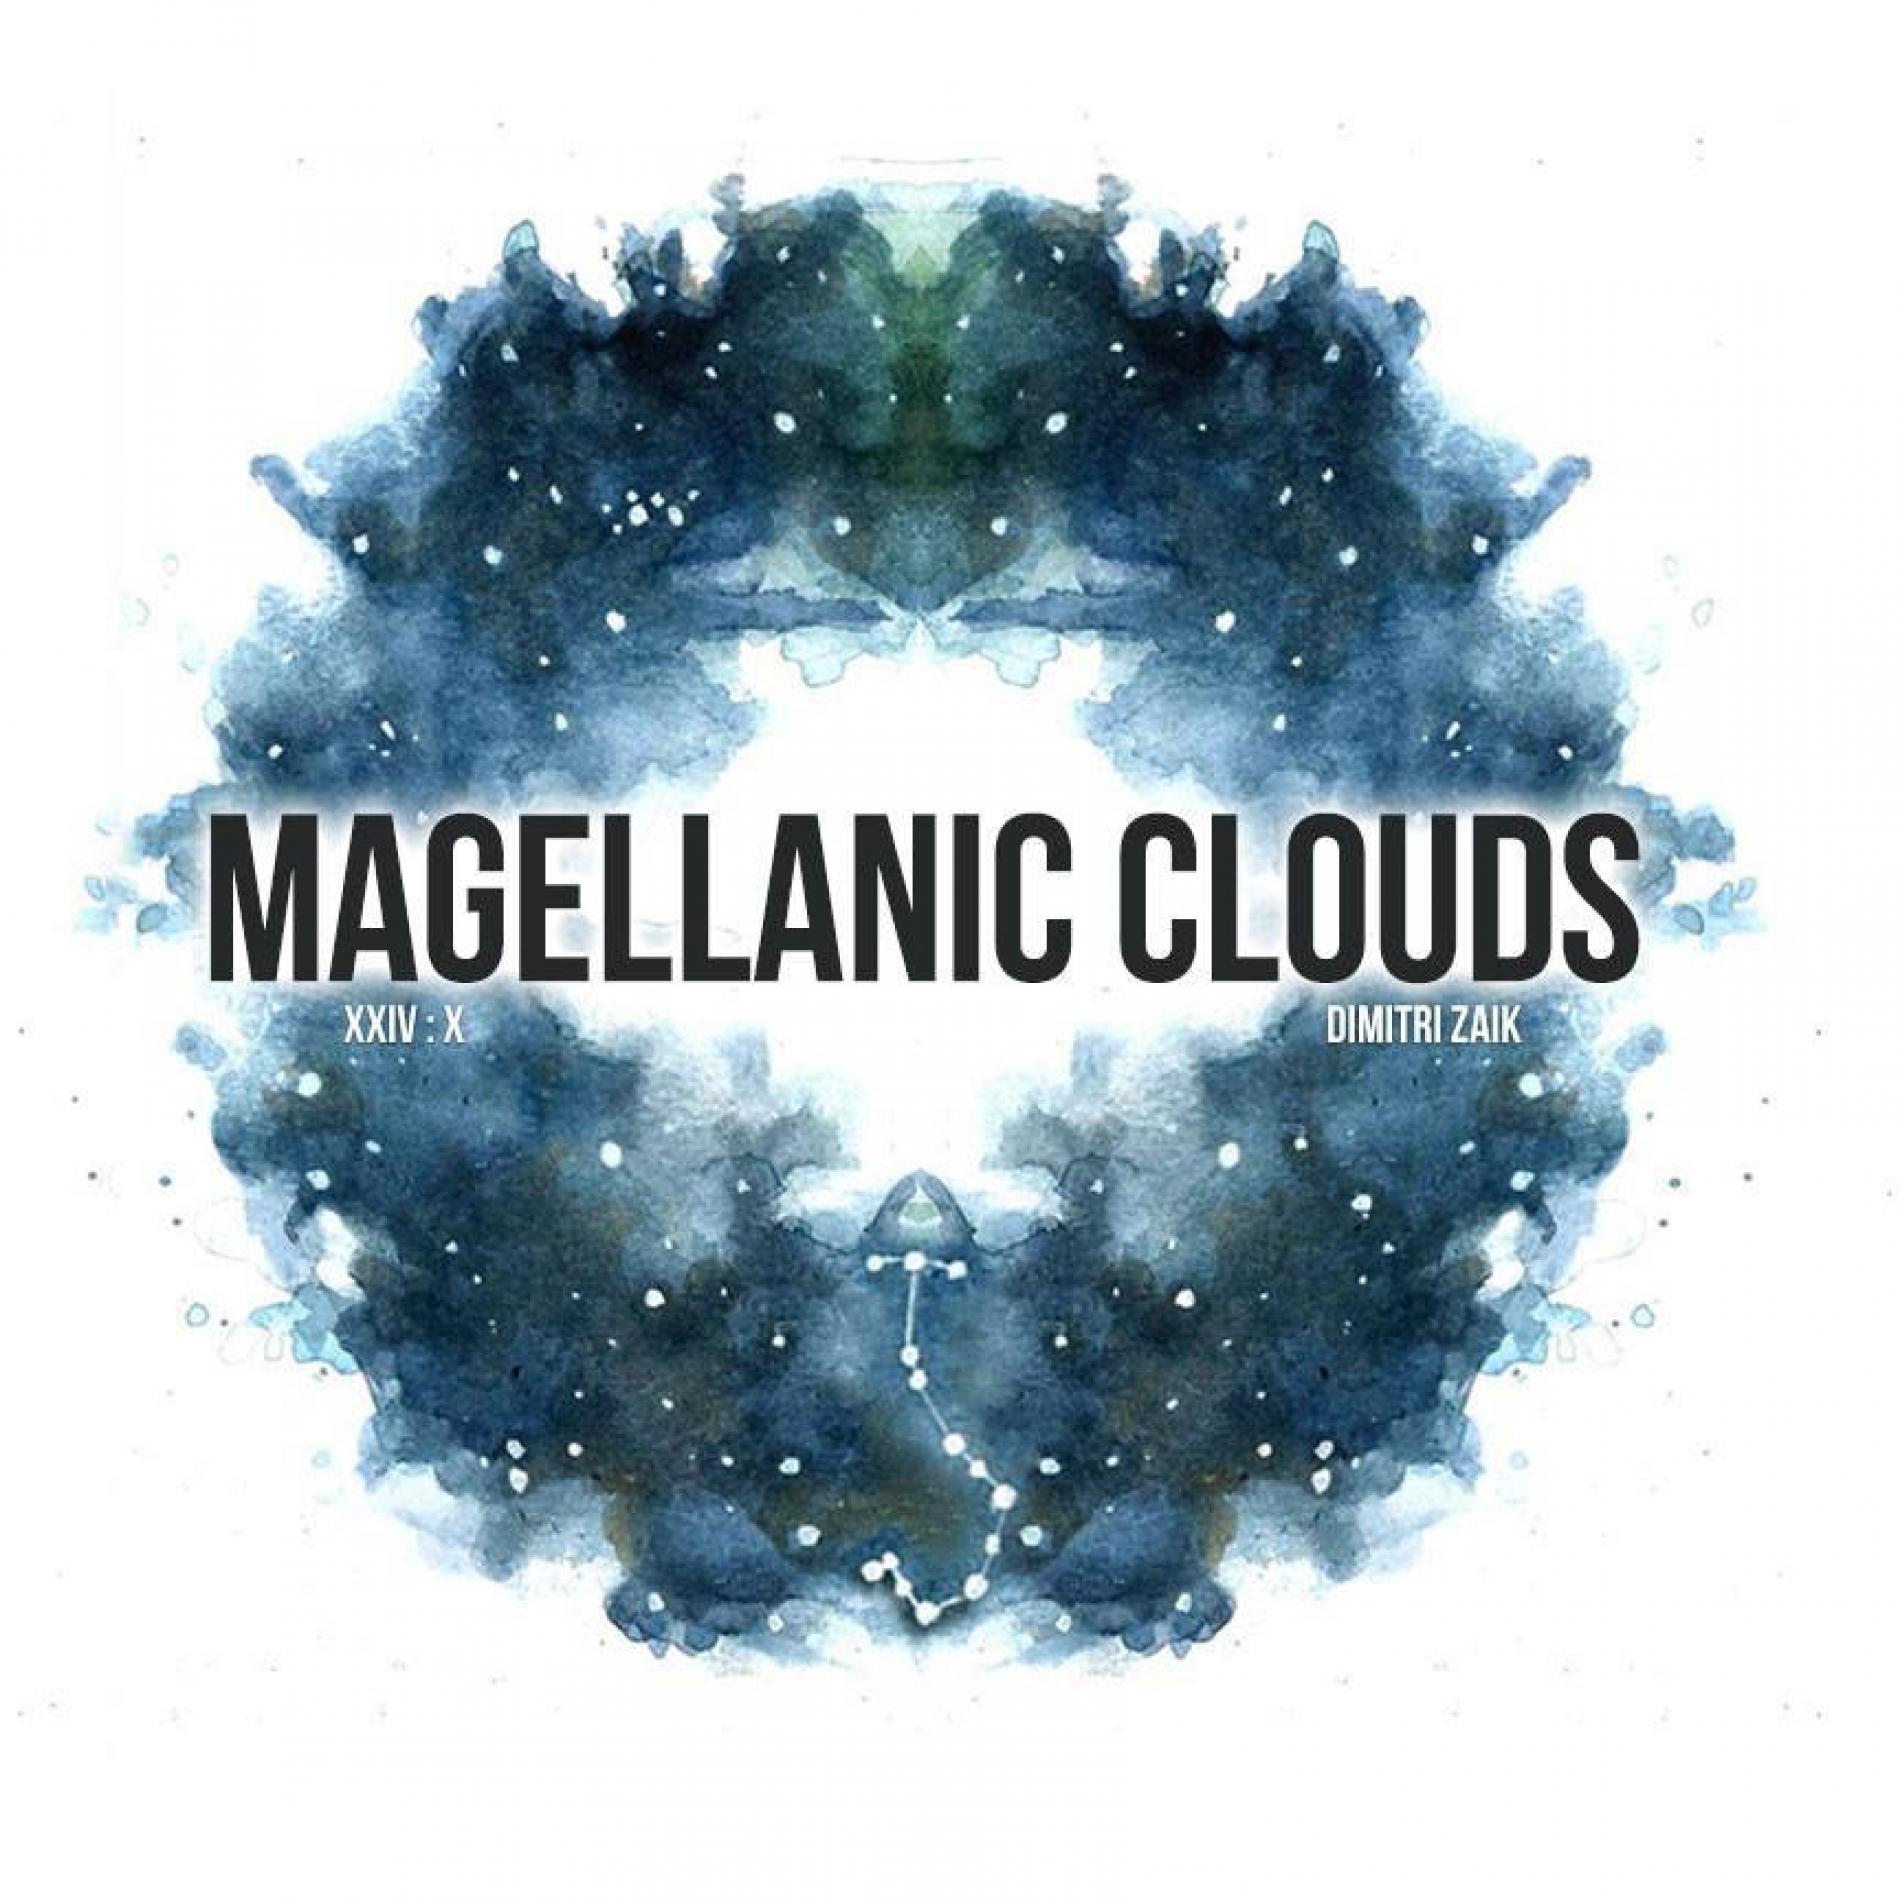 Dimitri Zaik – Magellanic Clouds